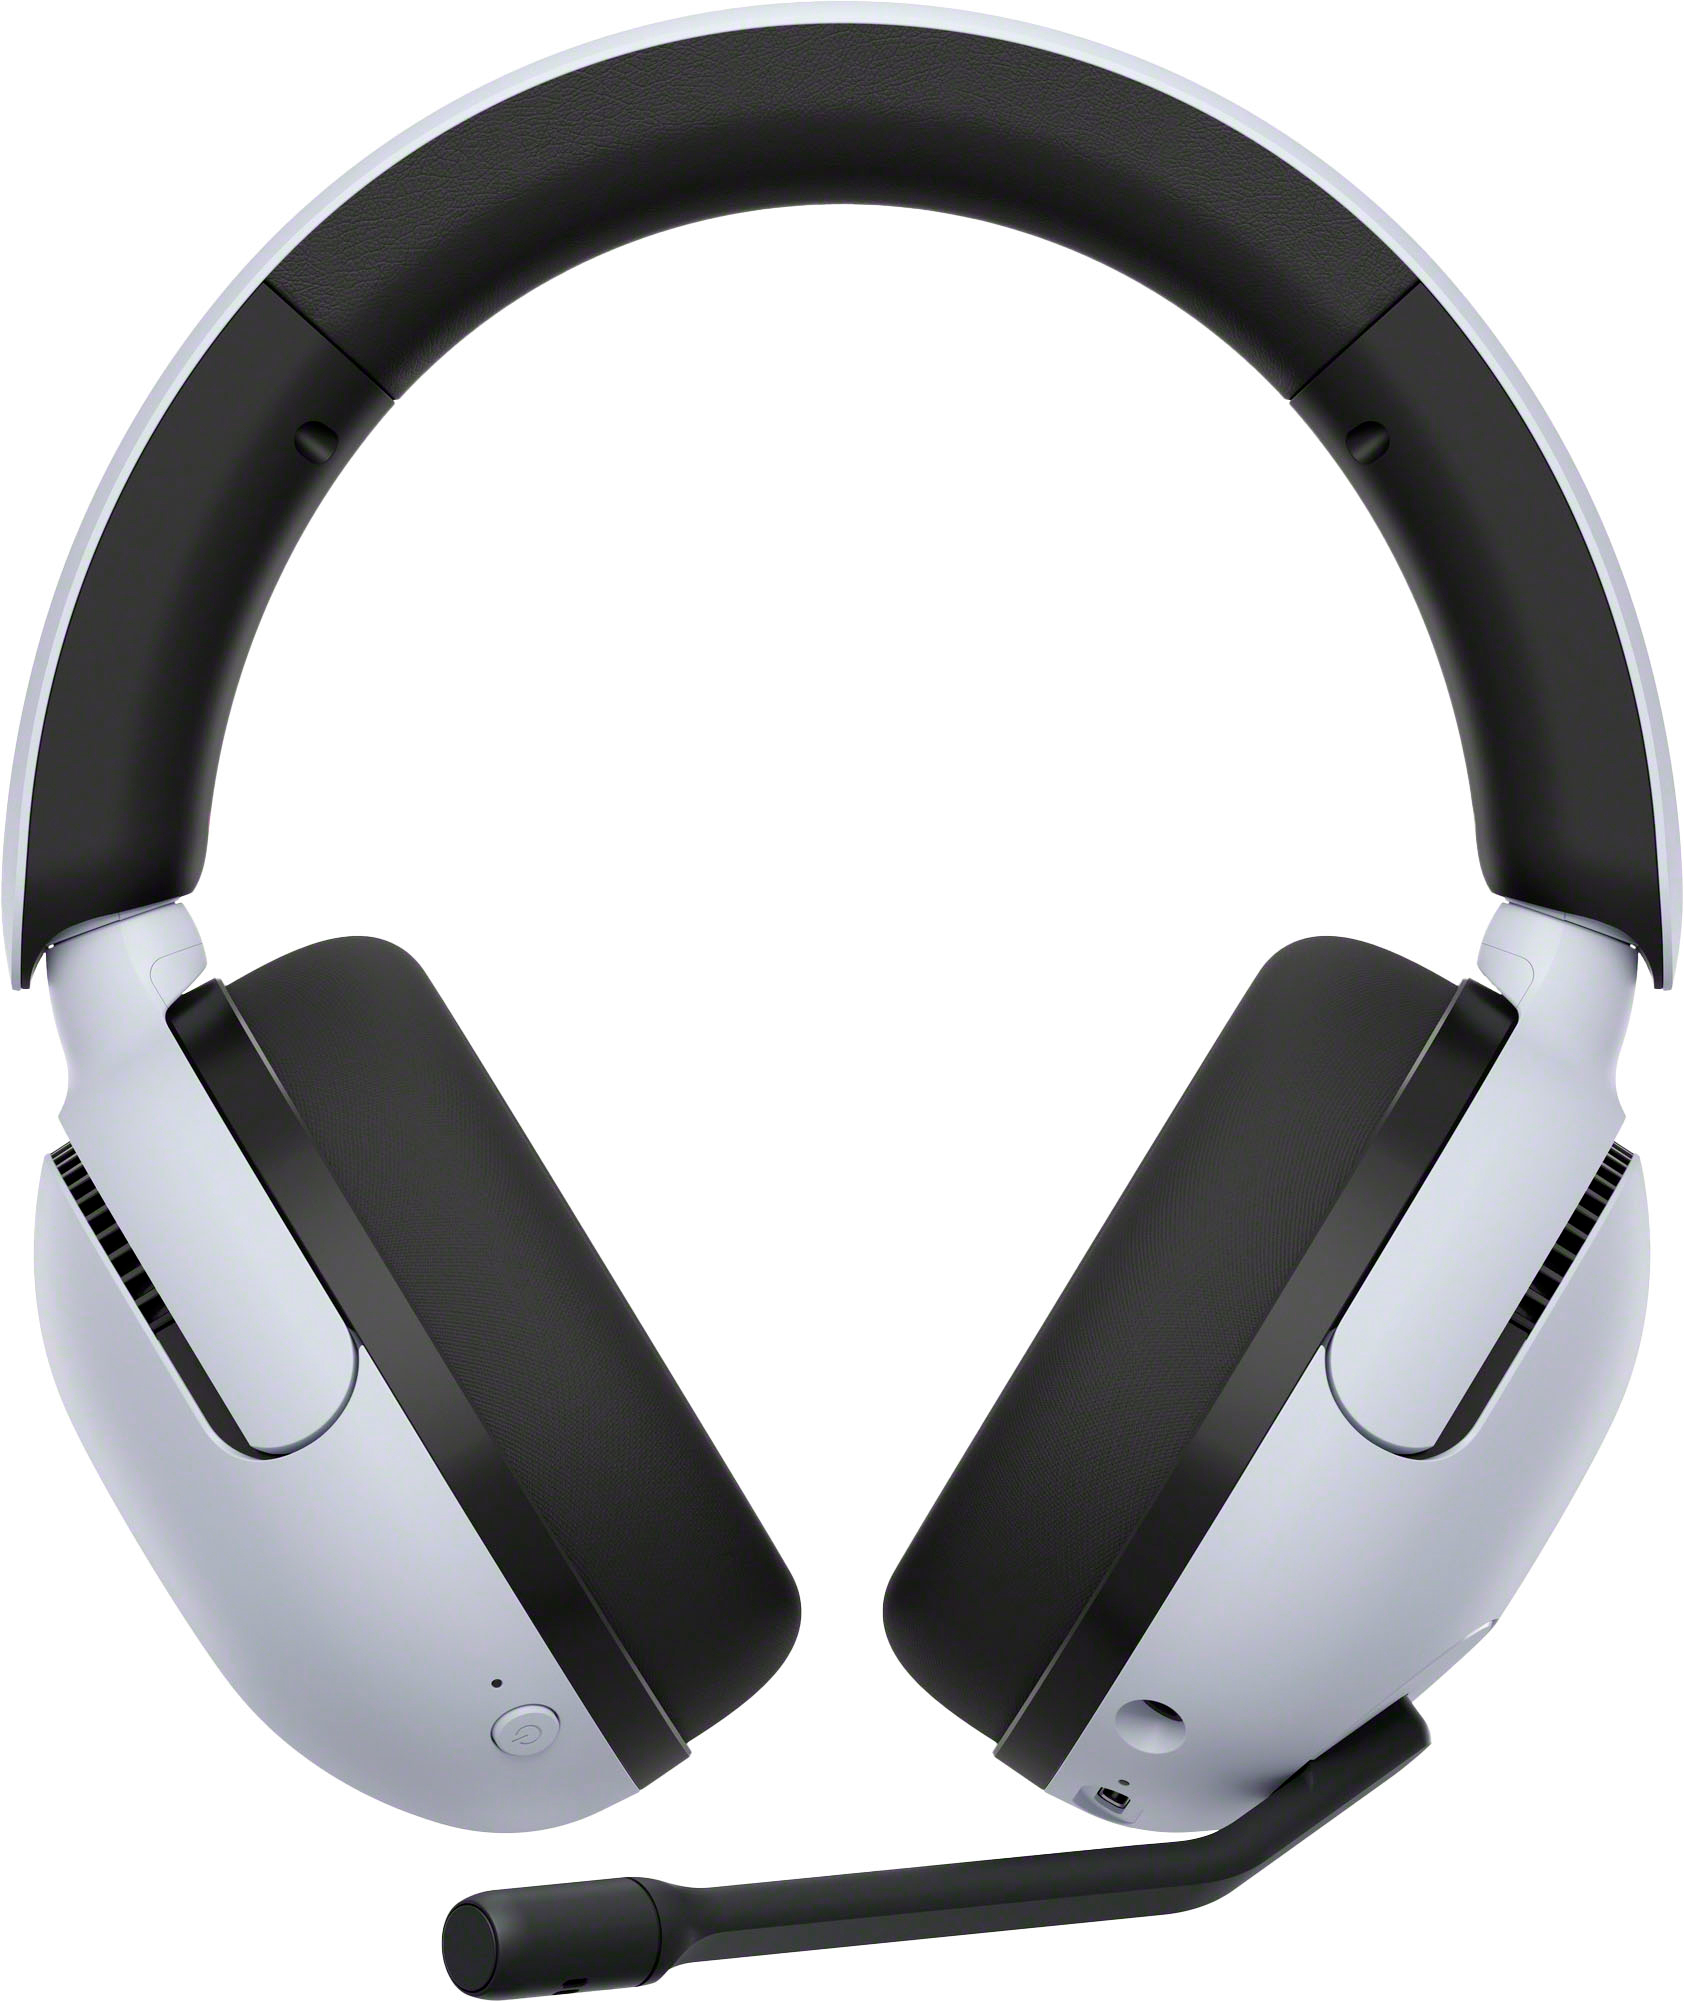 H5 INZONE Buy WHG500/W Headset White Gaming - Sony Wireless Best